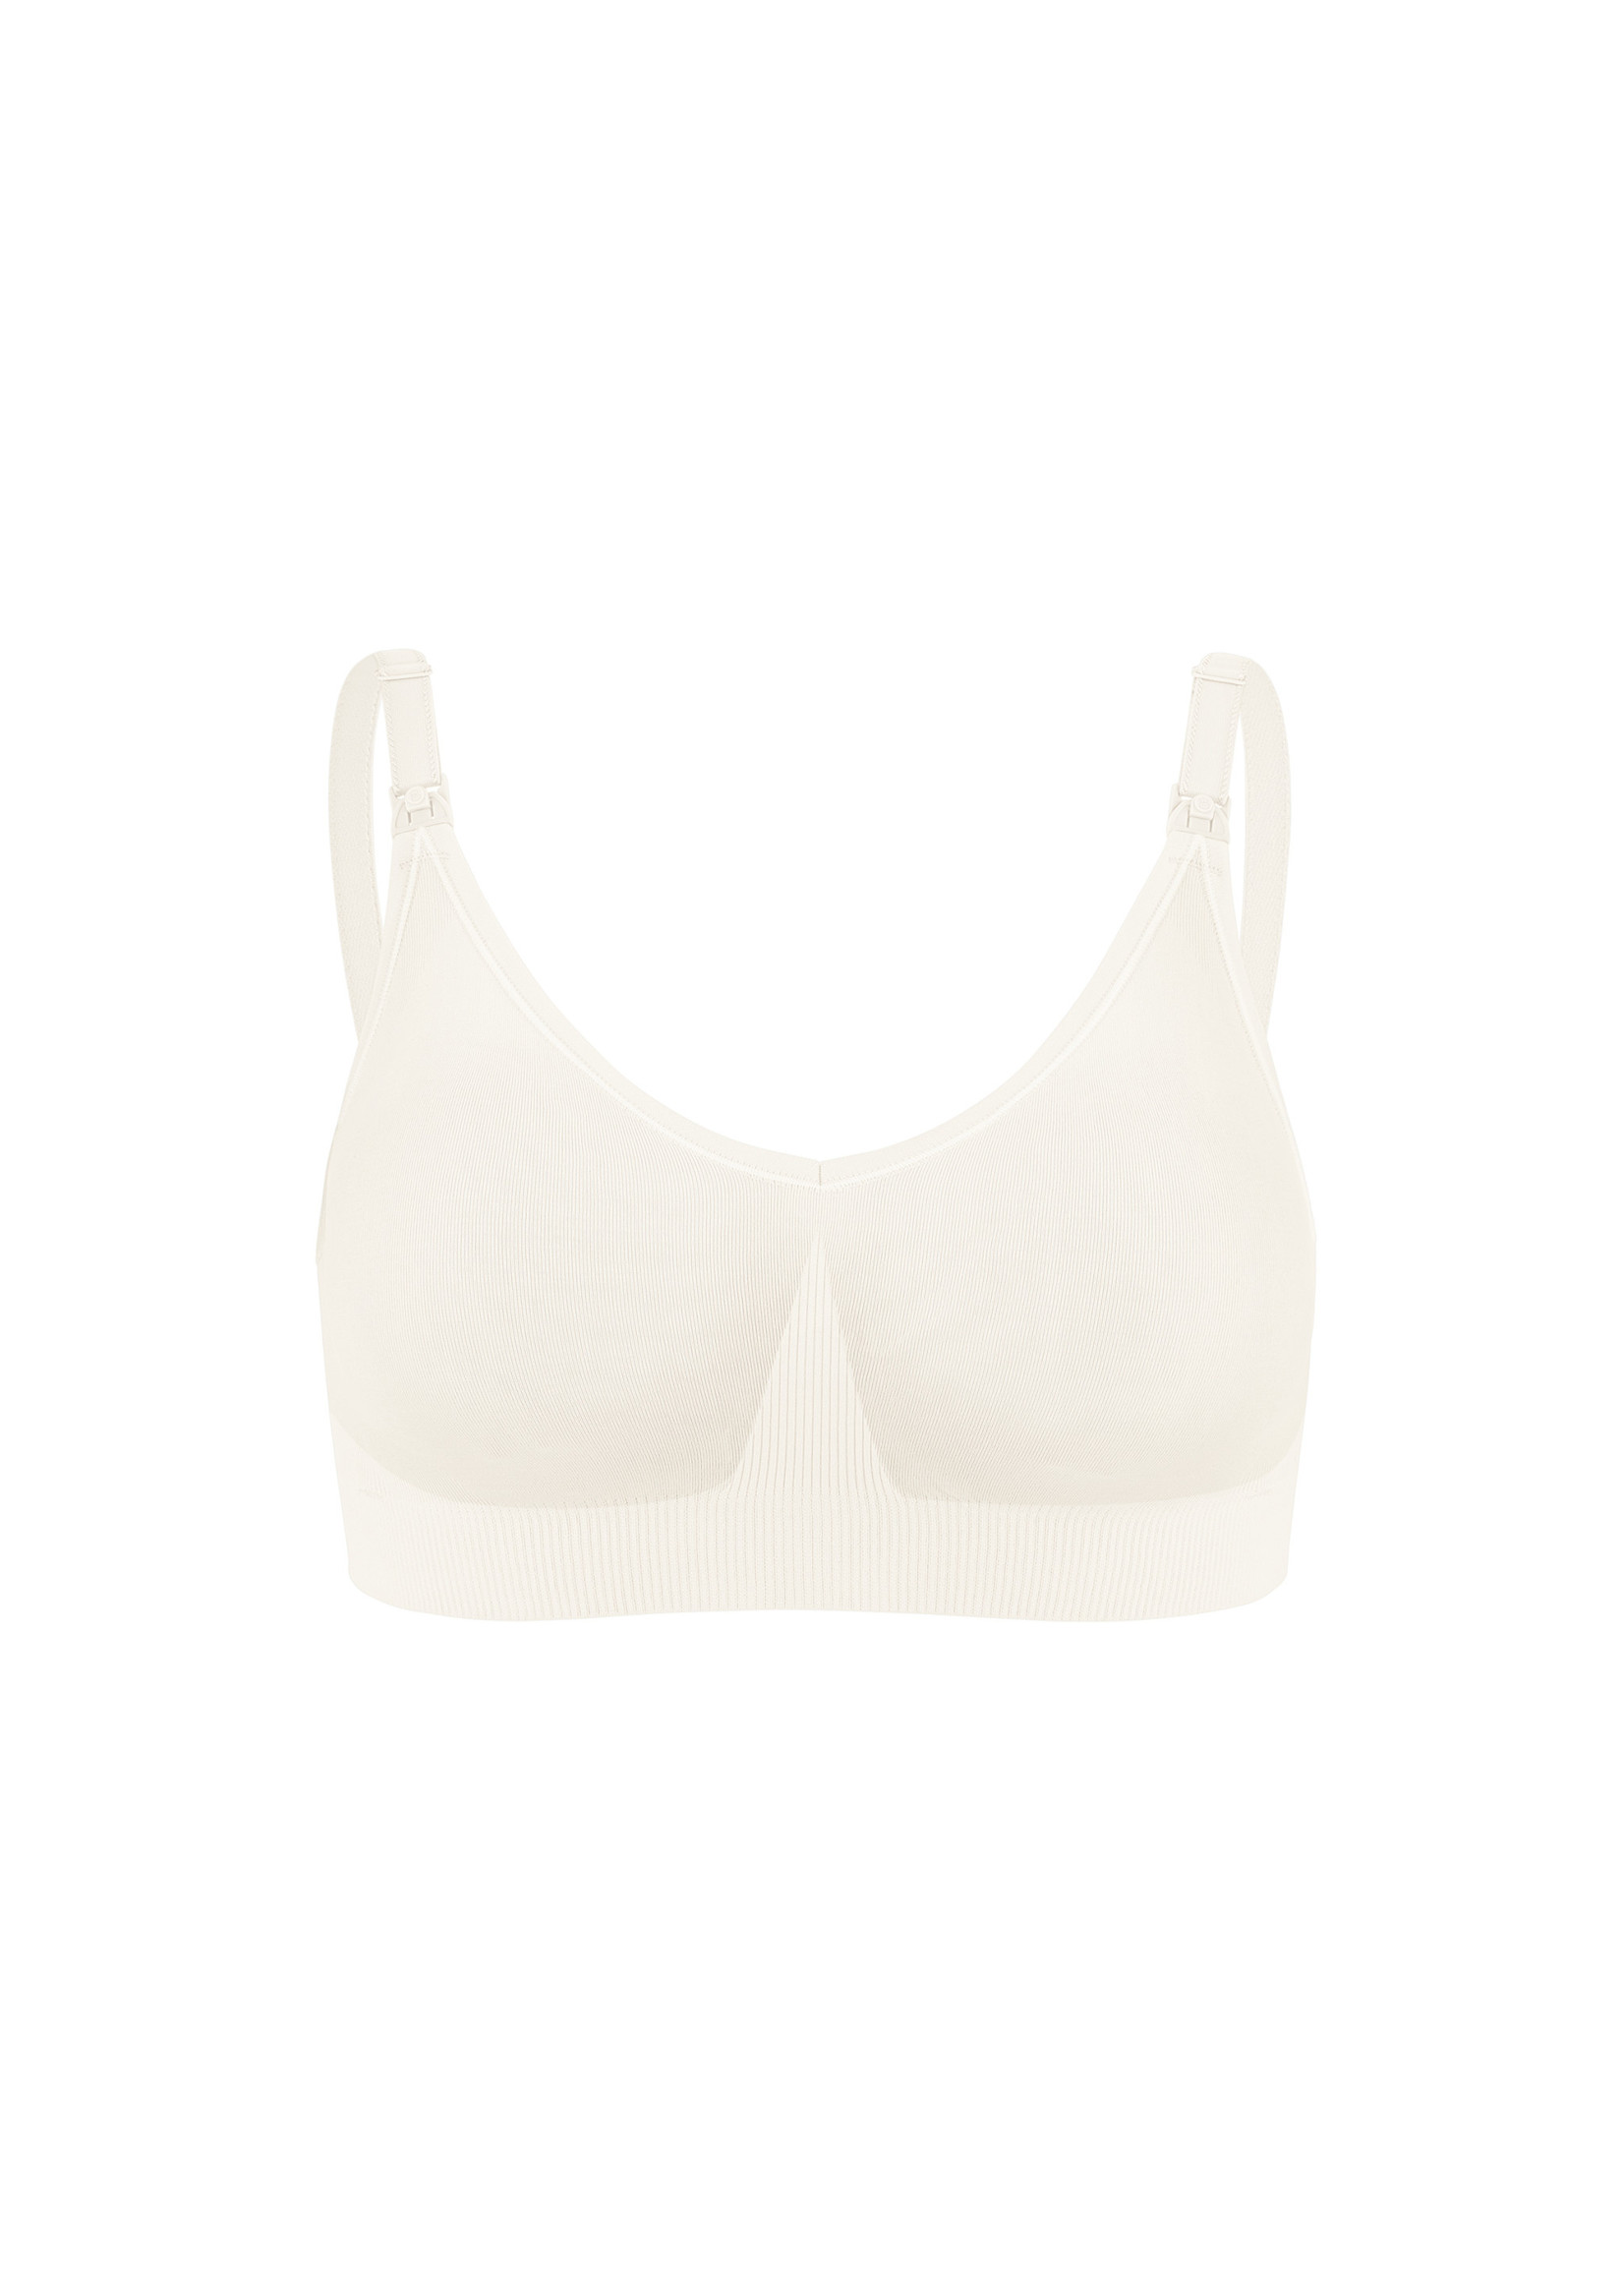 Bravado Designs Body Silk Full Cup Seamless Nursing Bra - Off White